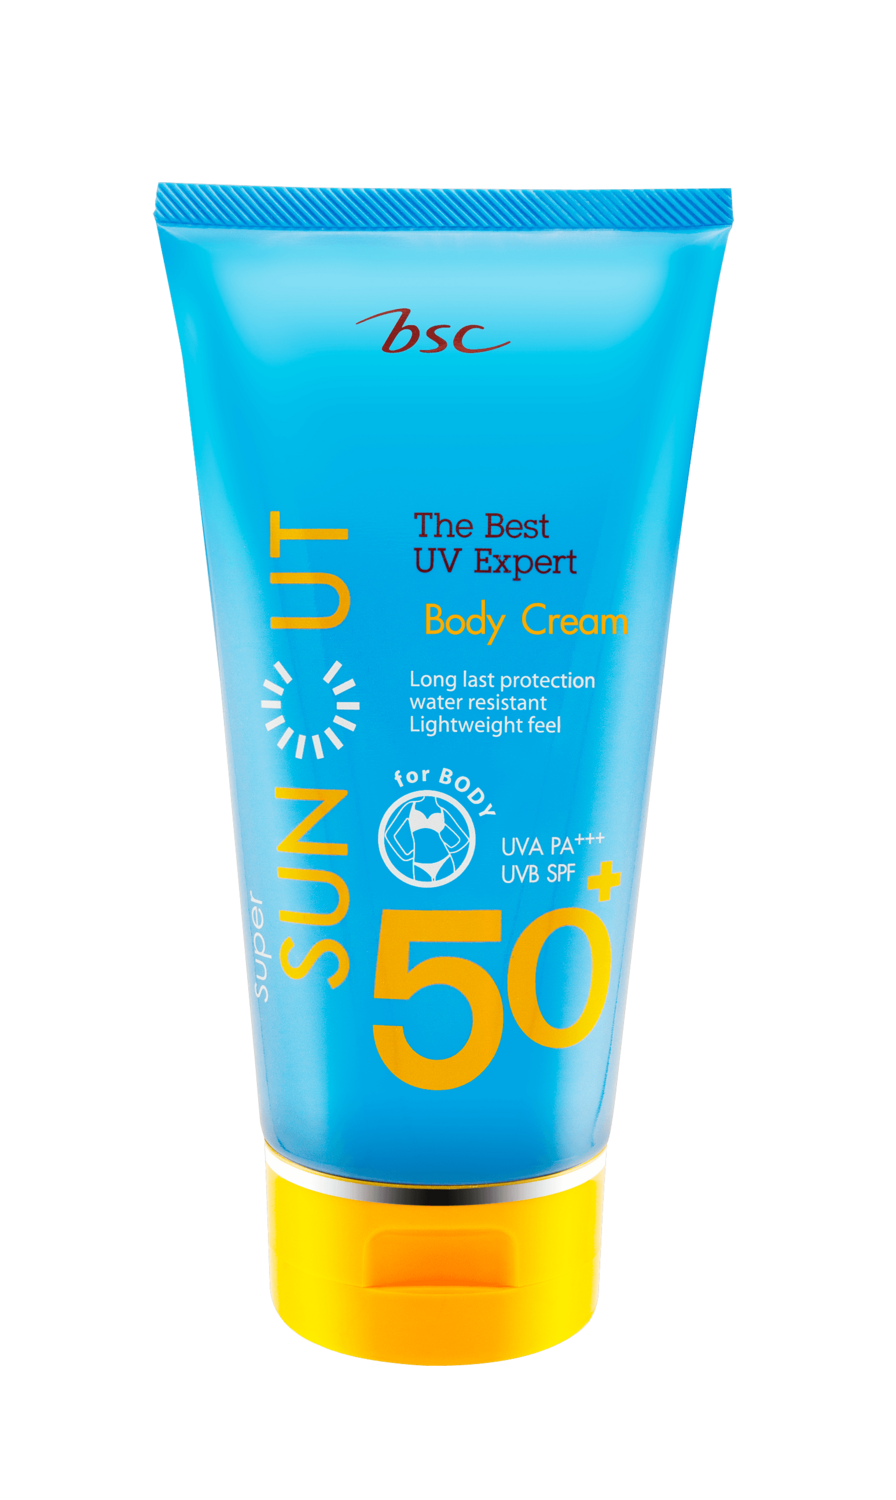 BSC SUPER SUN CUT THE BEST UV EXPERT BODY CREAM SPF50 PA+++